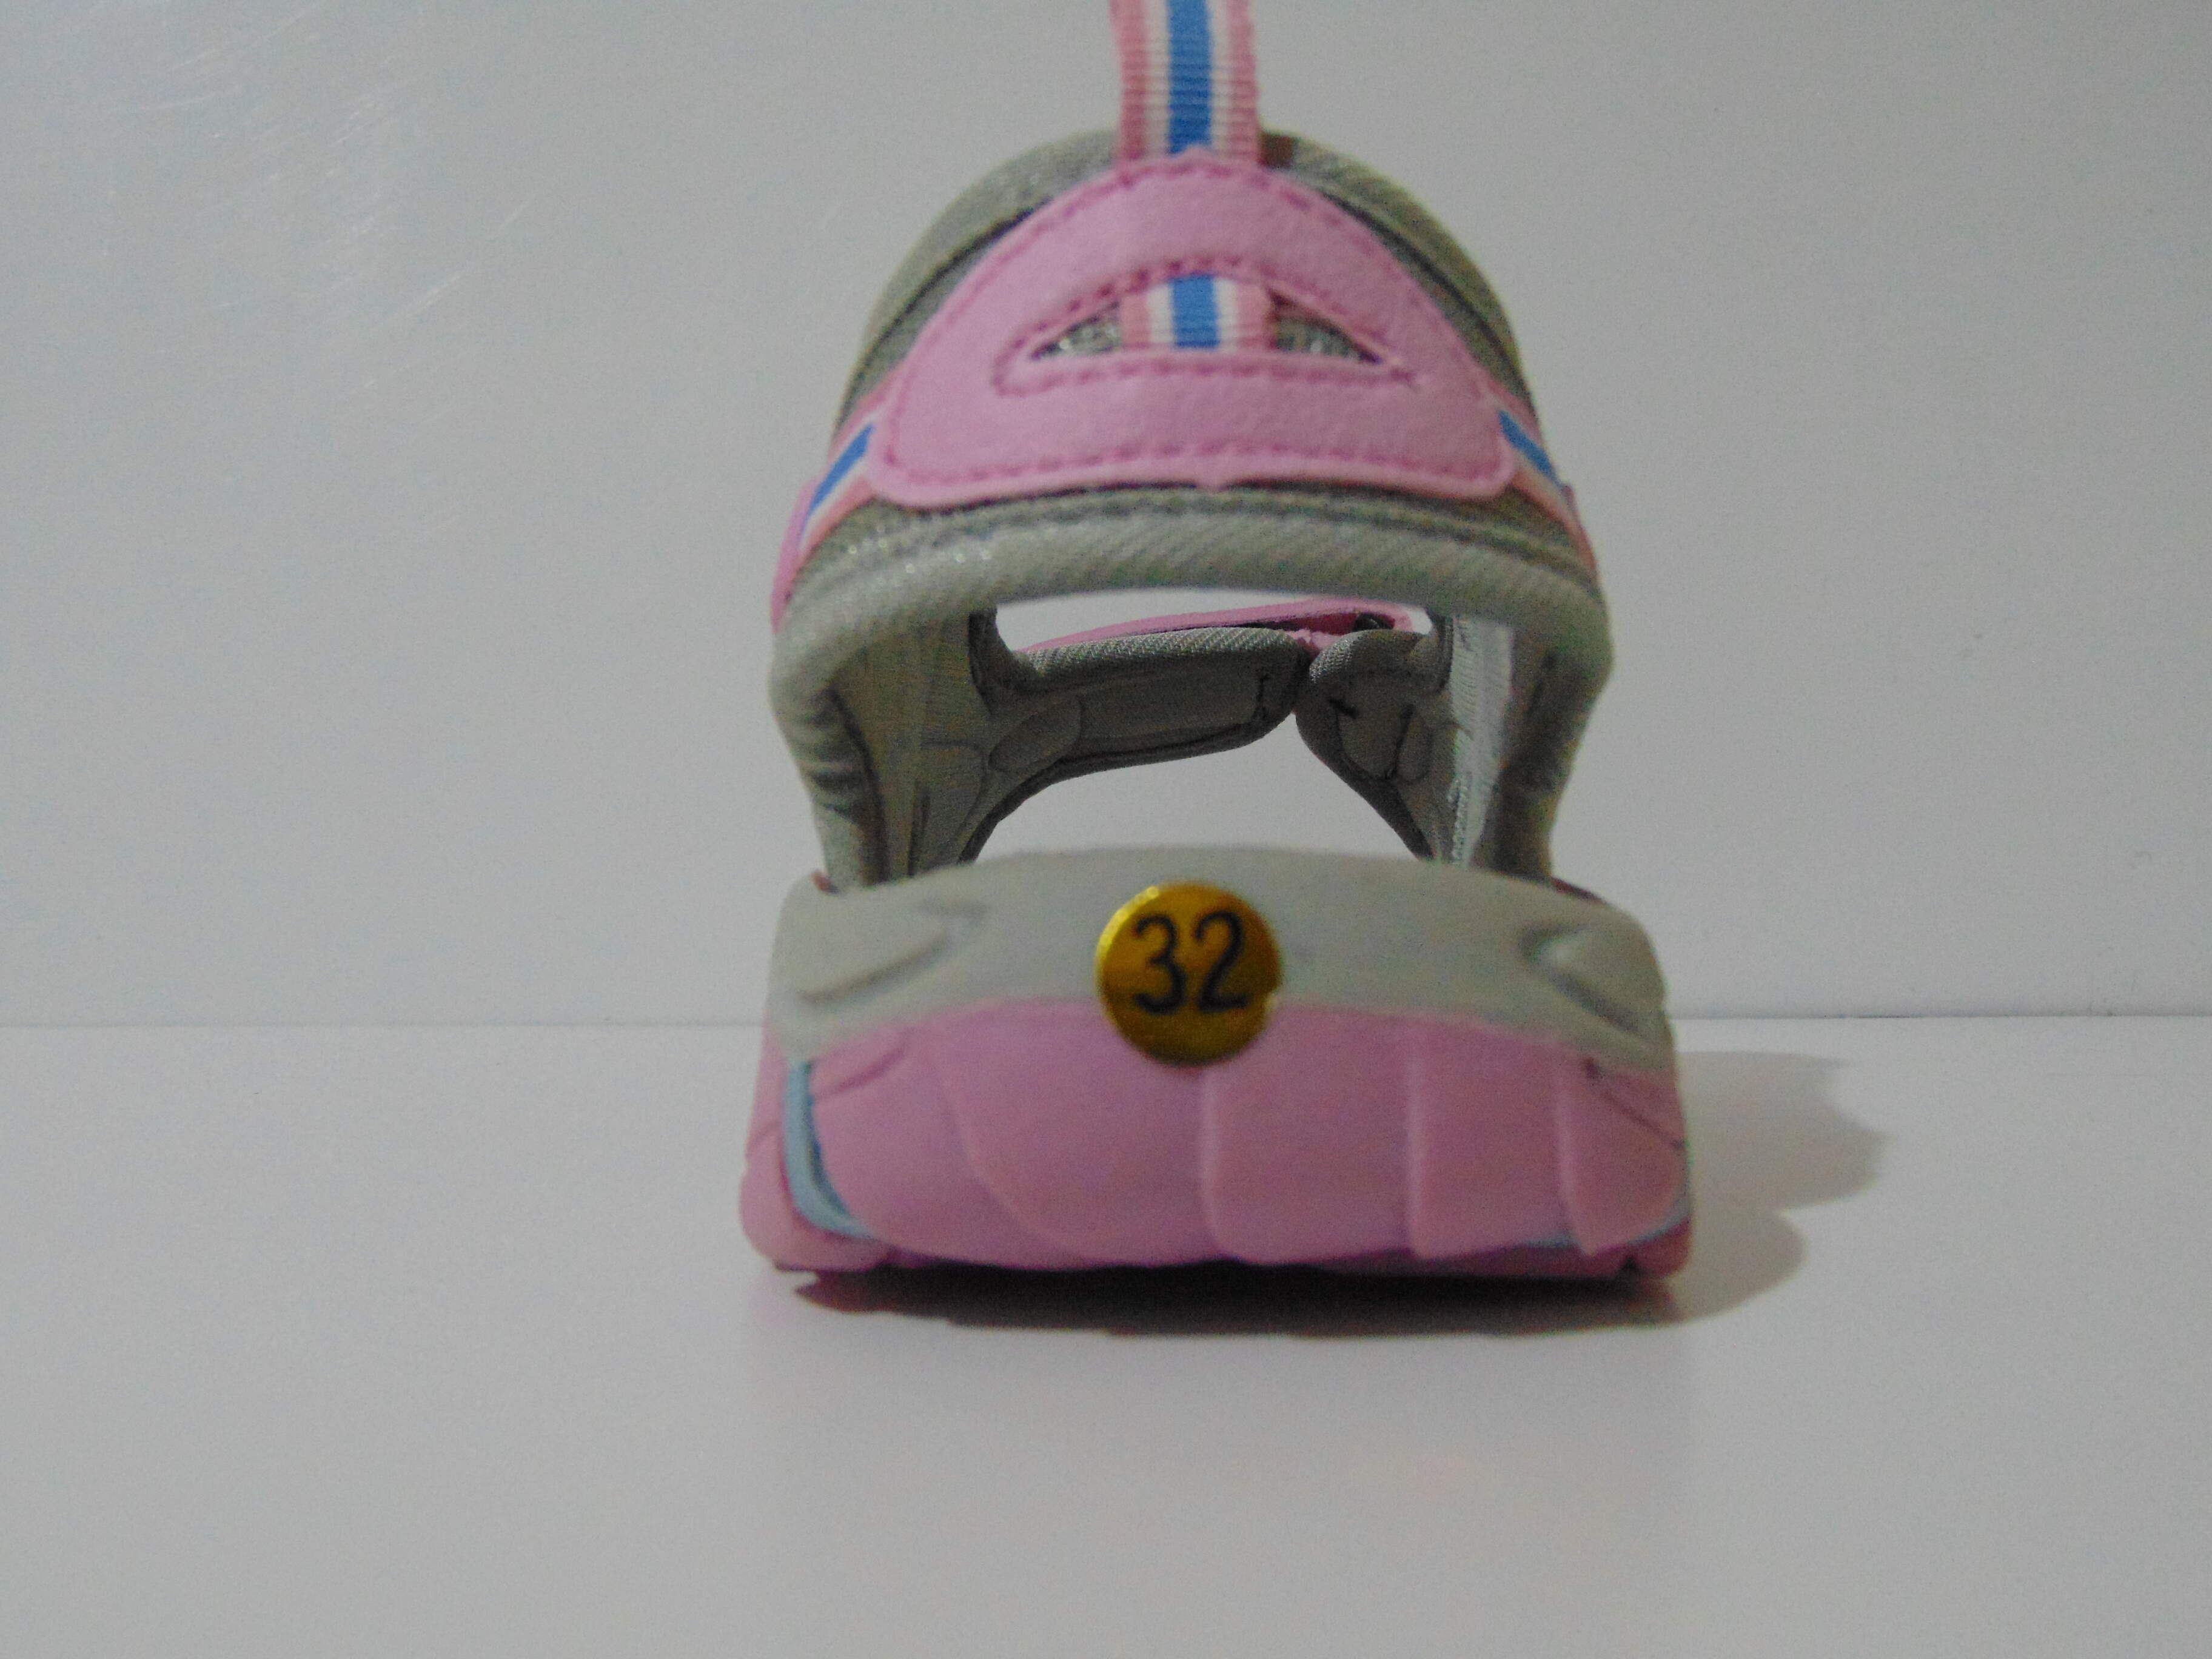 Rucanor Girls Summer Sandals Outdoor Footwear Colour Pink/Light Gray /White  22055-01